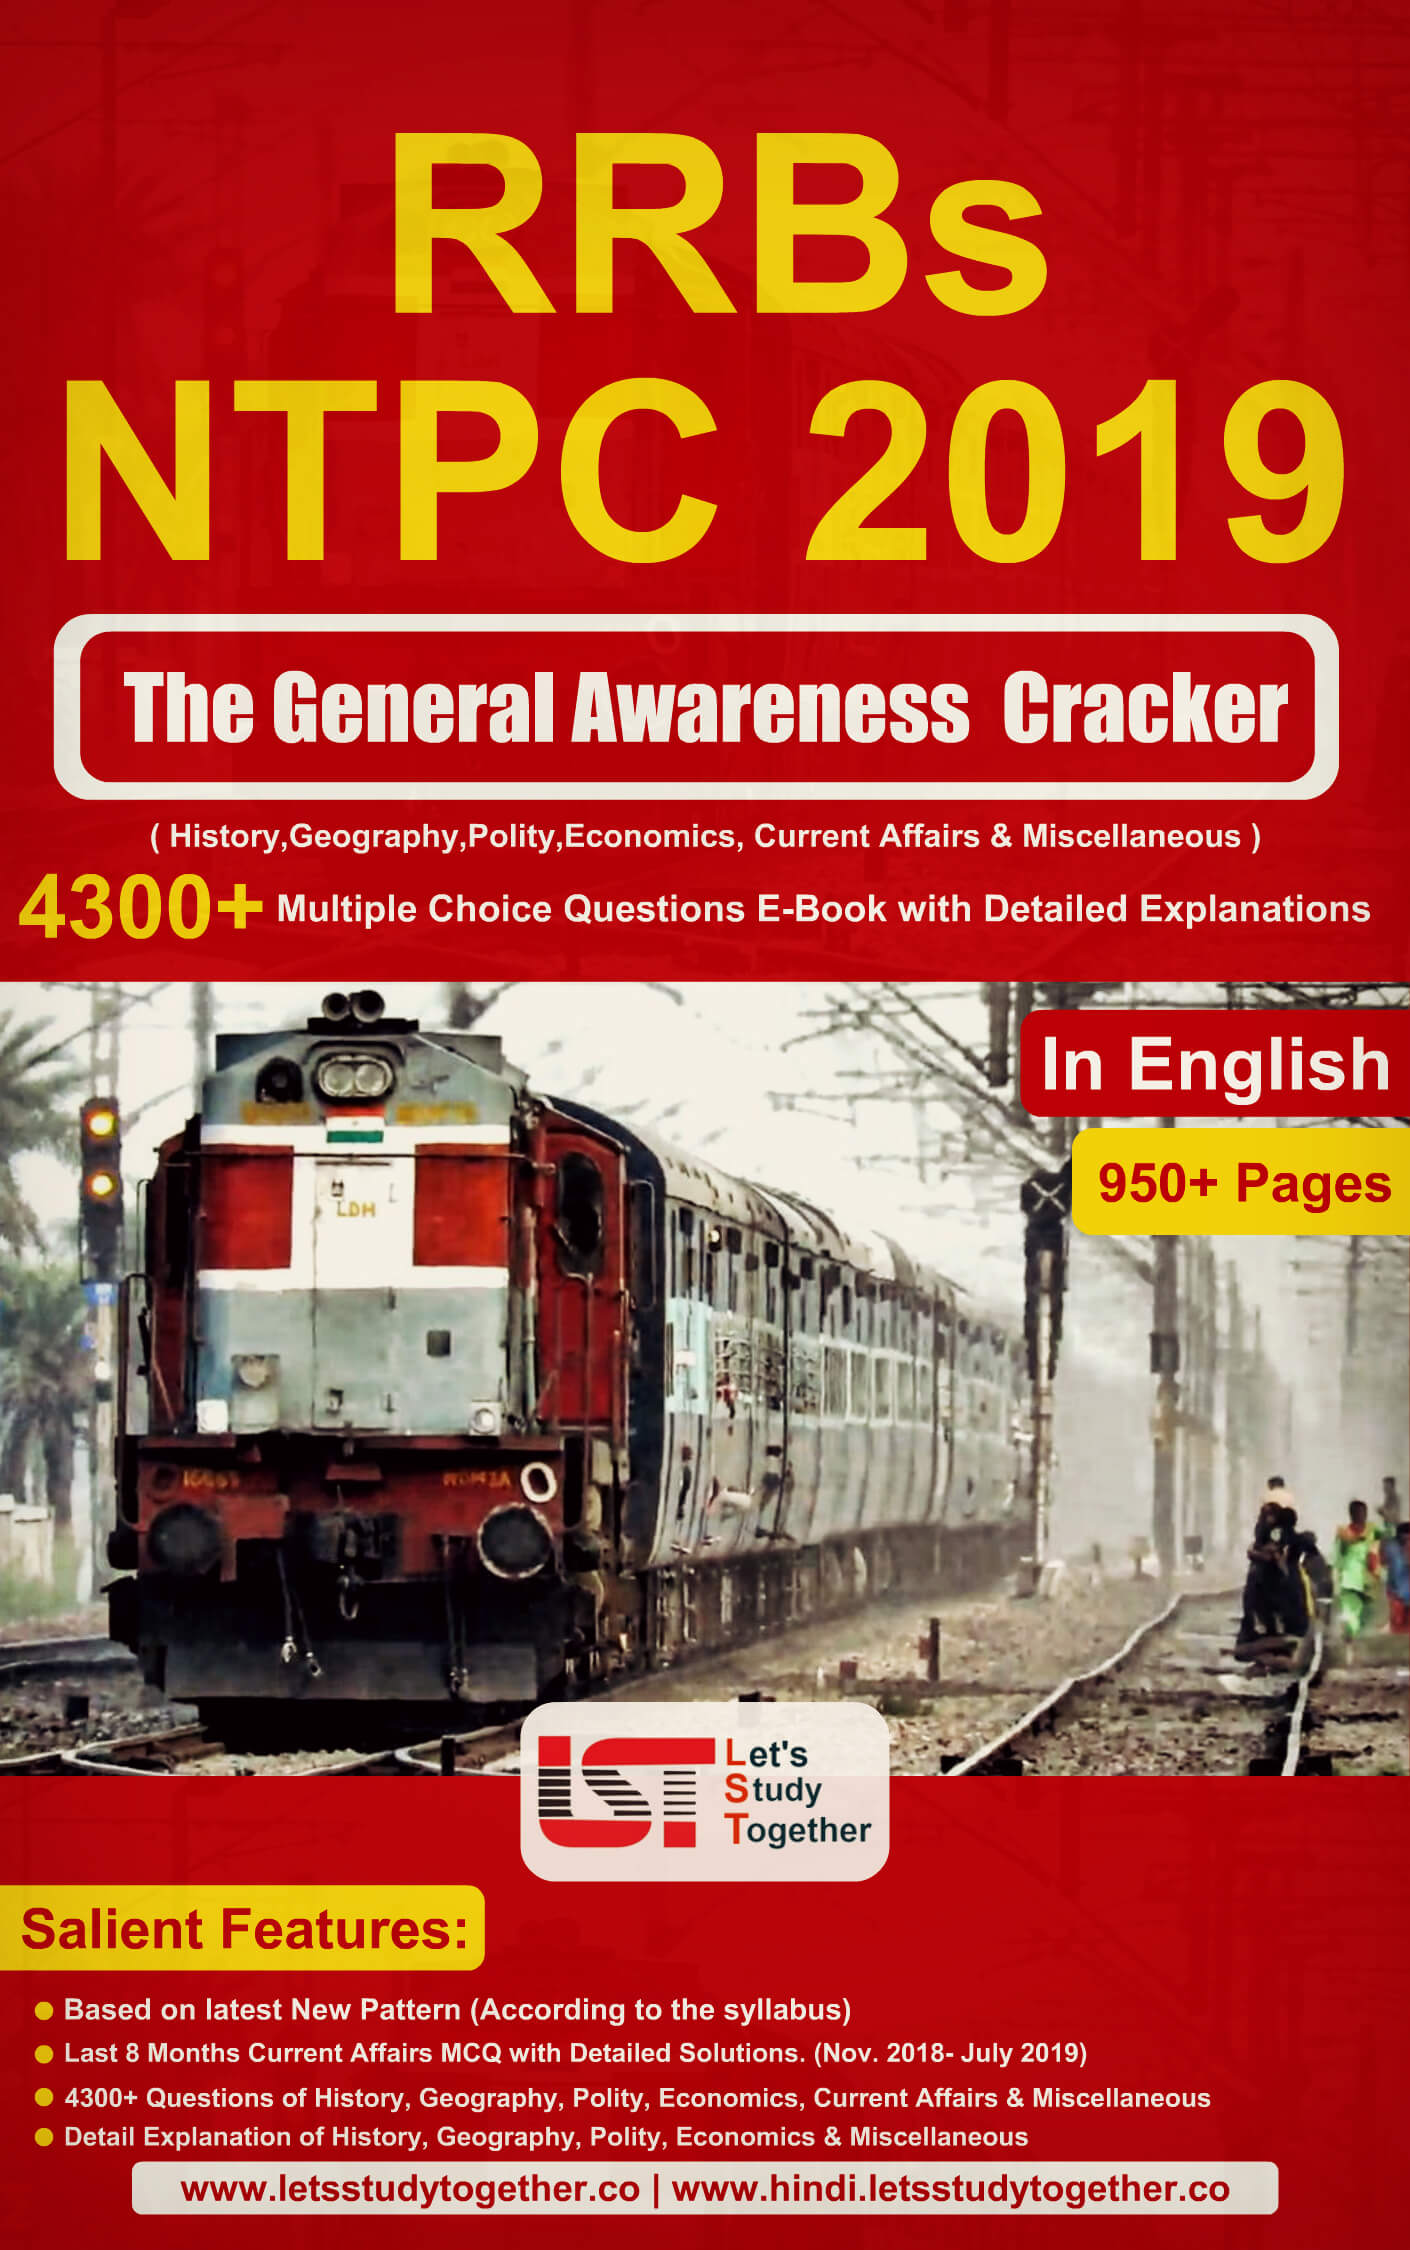 The General Awareness Cracker - RRB NTPC 2019